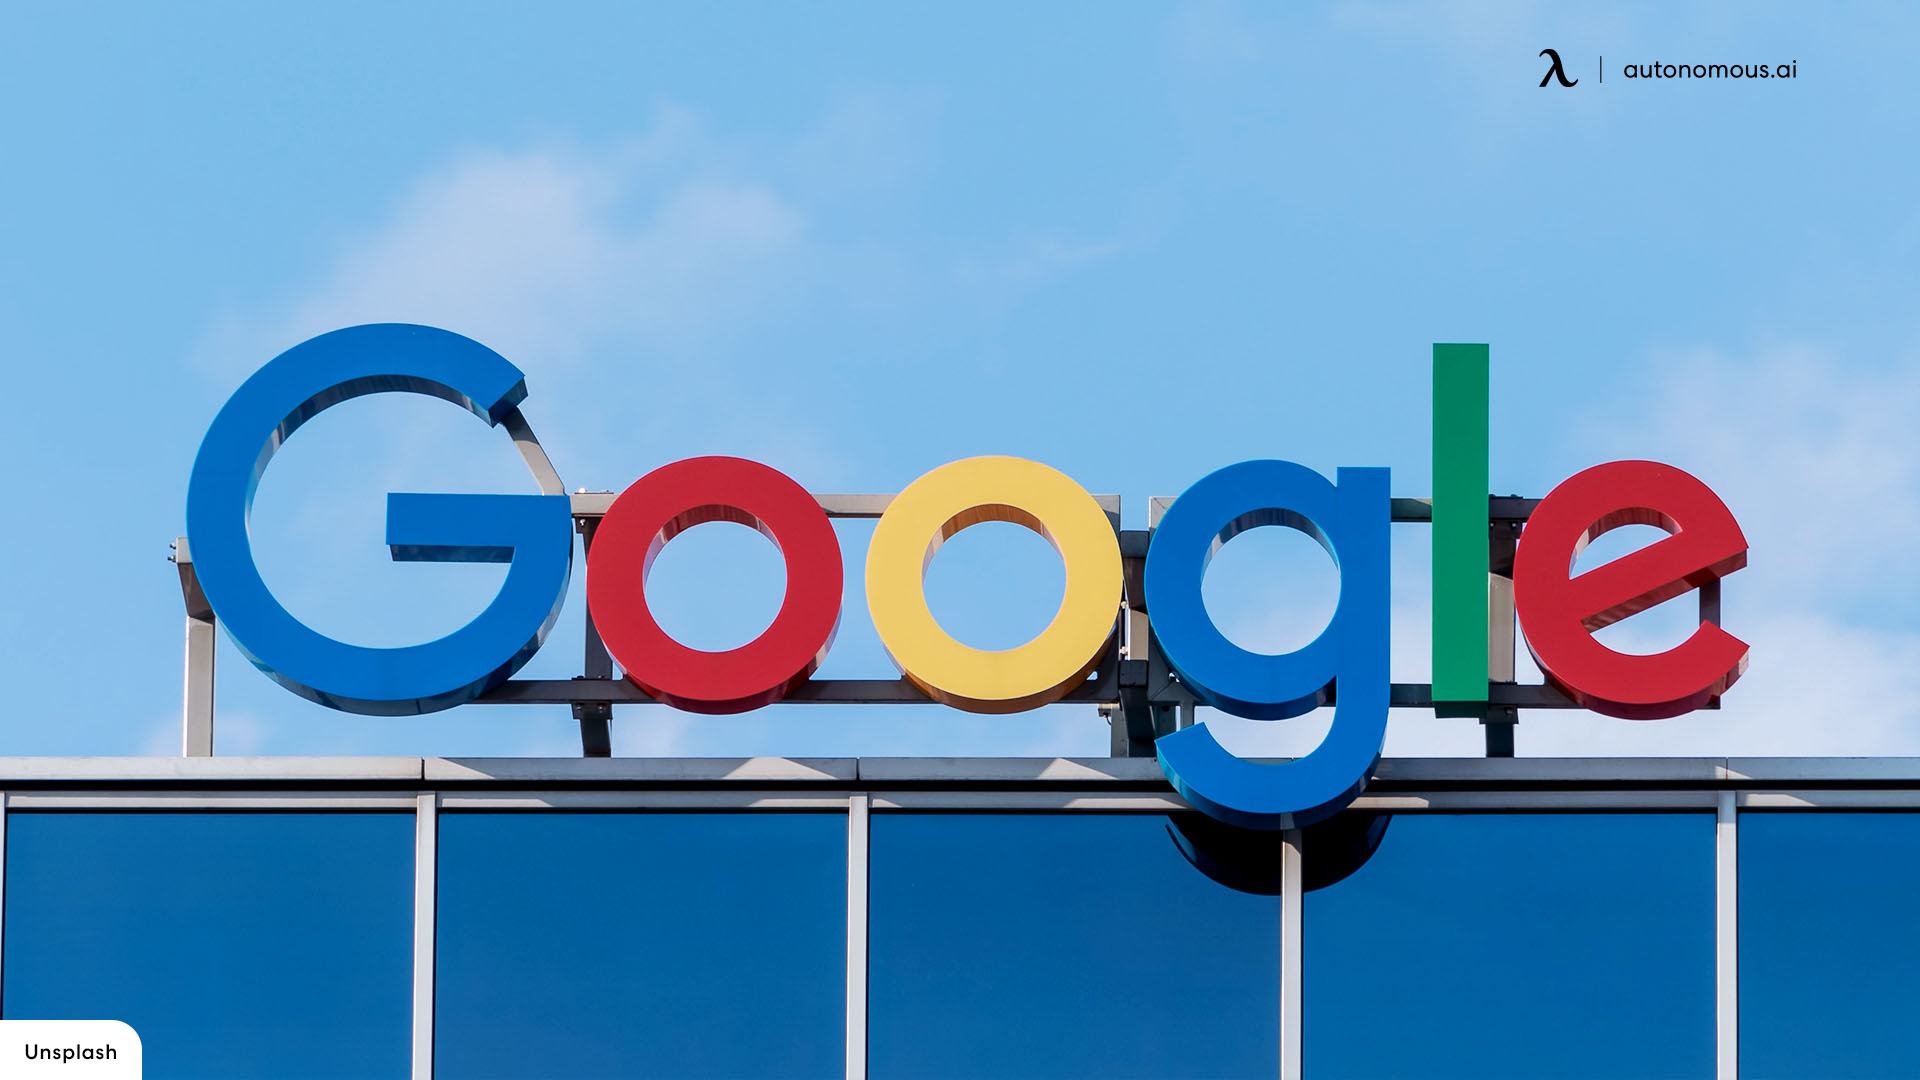 Google Employee Benefits Program from Autonomous